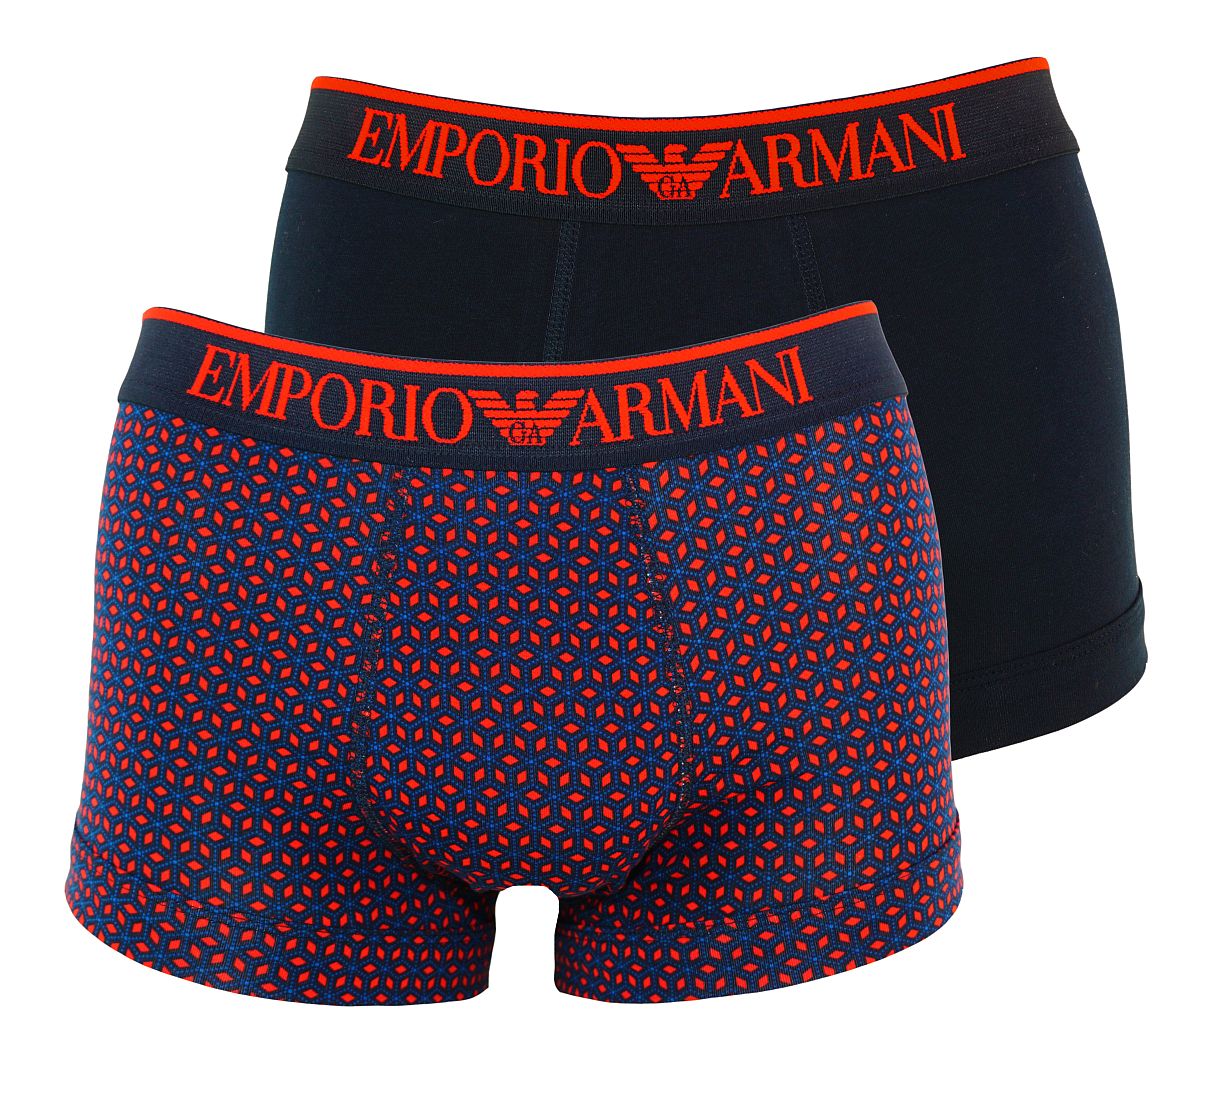 Emporio Armani 2er Pack Trunk Shorts MAR-ROMBO ROS/MARINE 111210 7P504 40135 WF17-EAT1